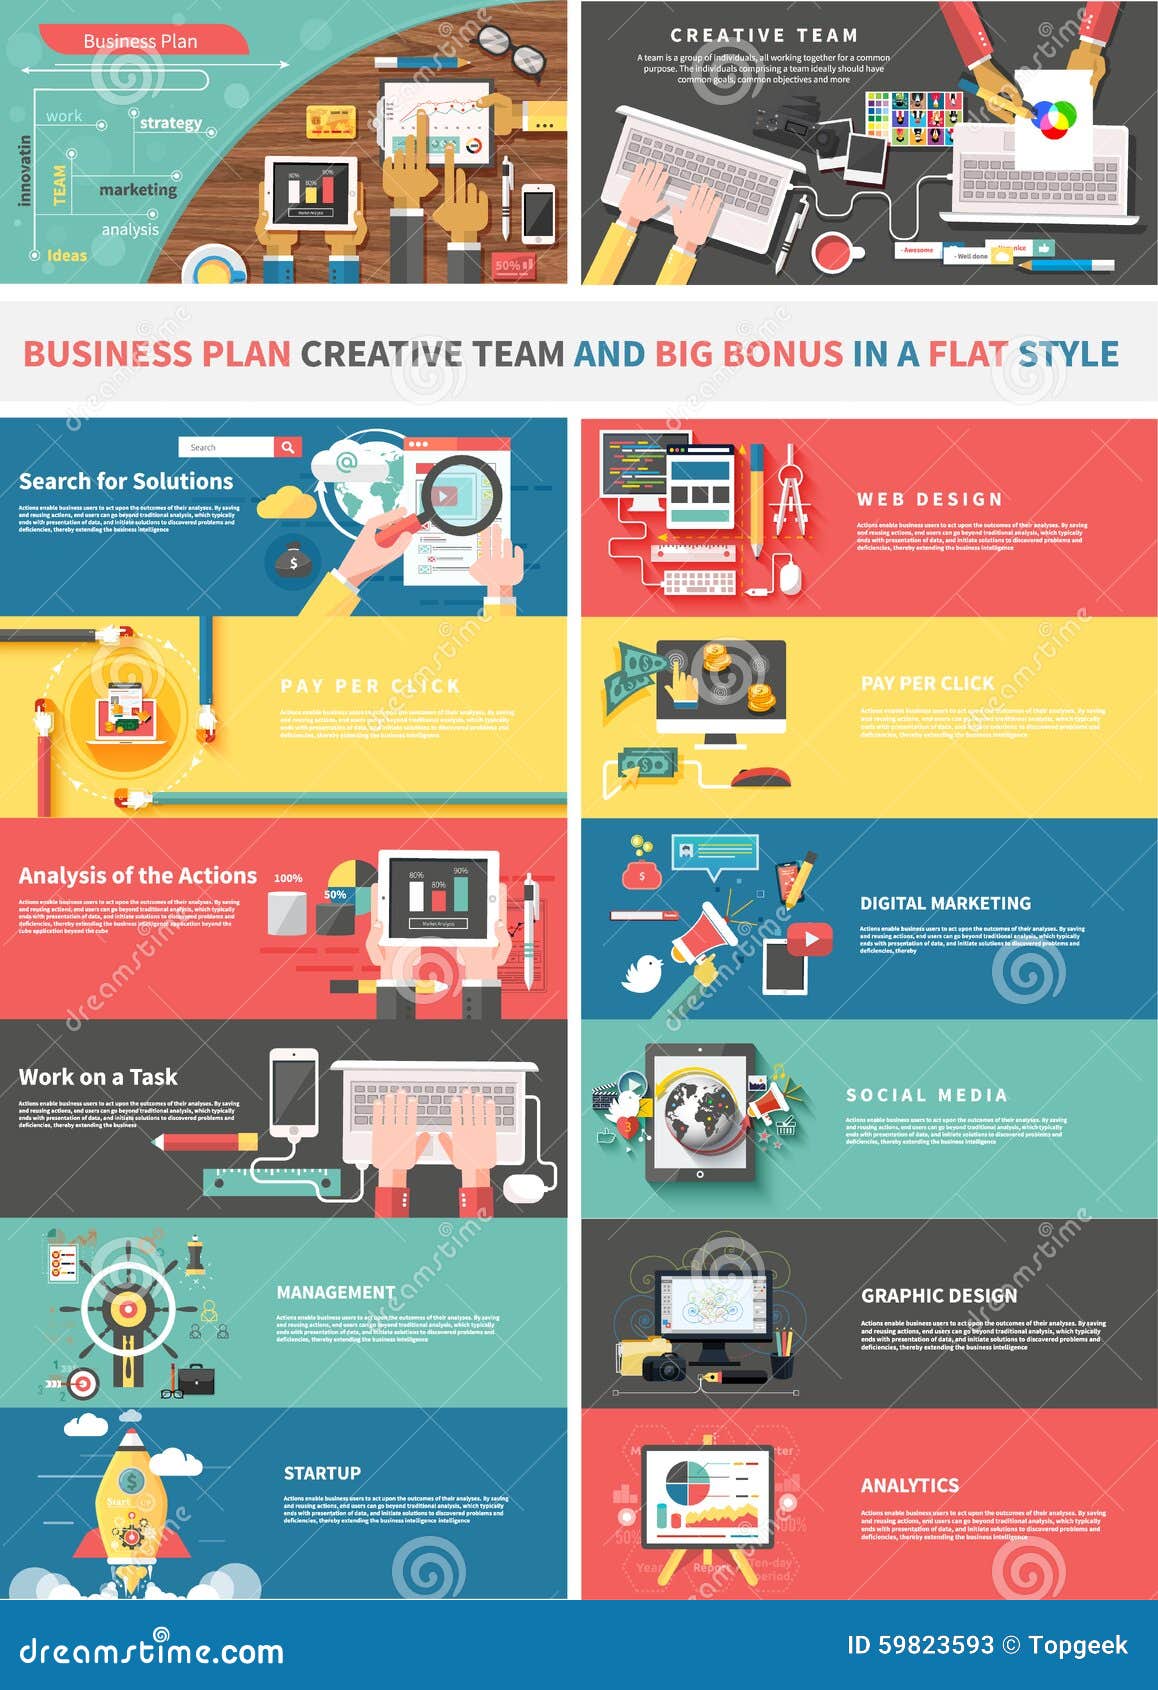 Sample Design Business Plan – Web Design & Graphic Design Business Plan